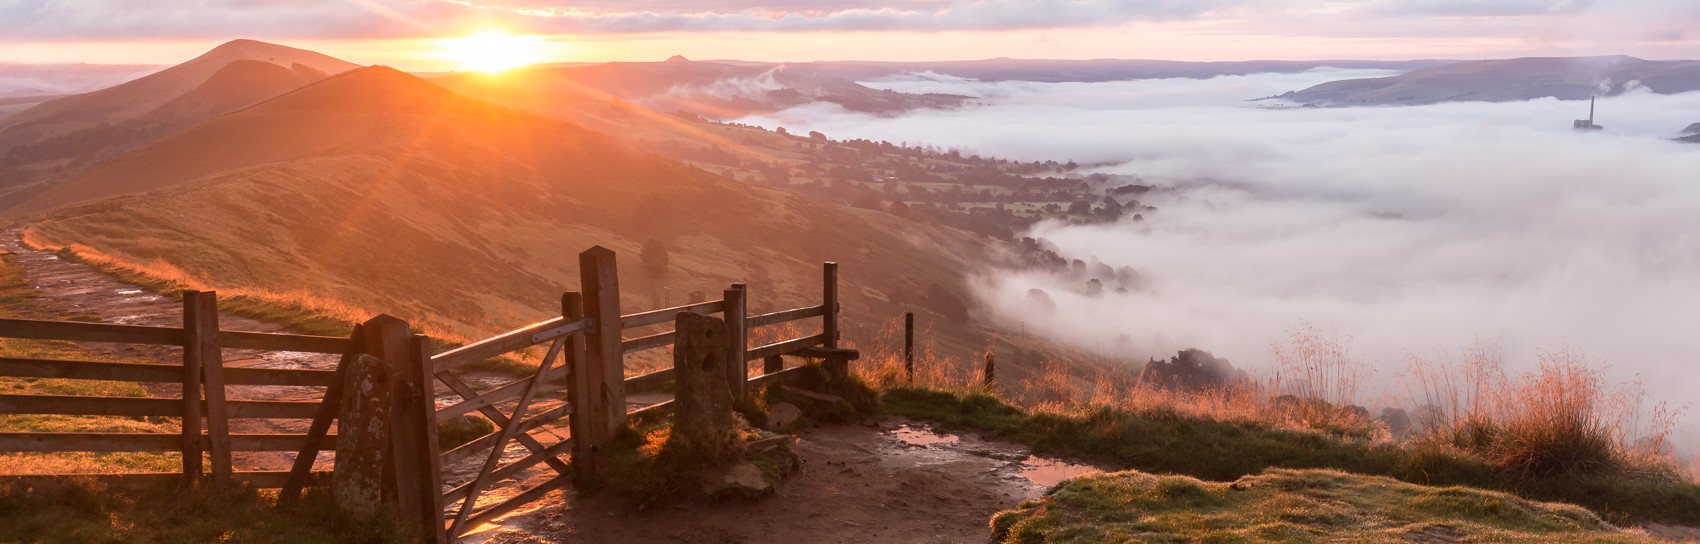 Derbyshire View. Photograph by DAVE ZDANOWICZ